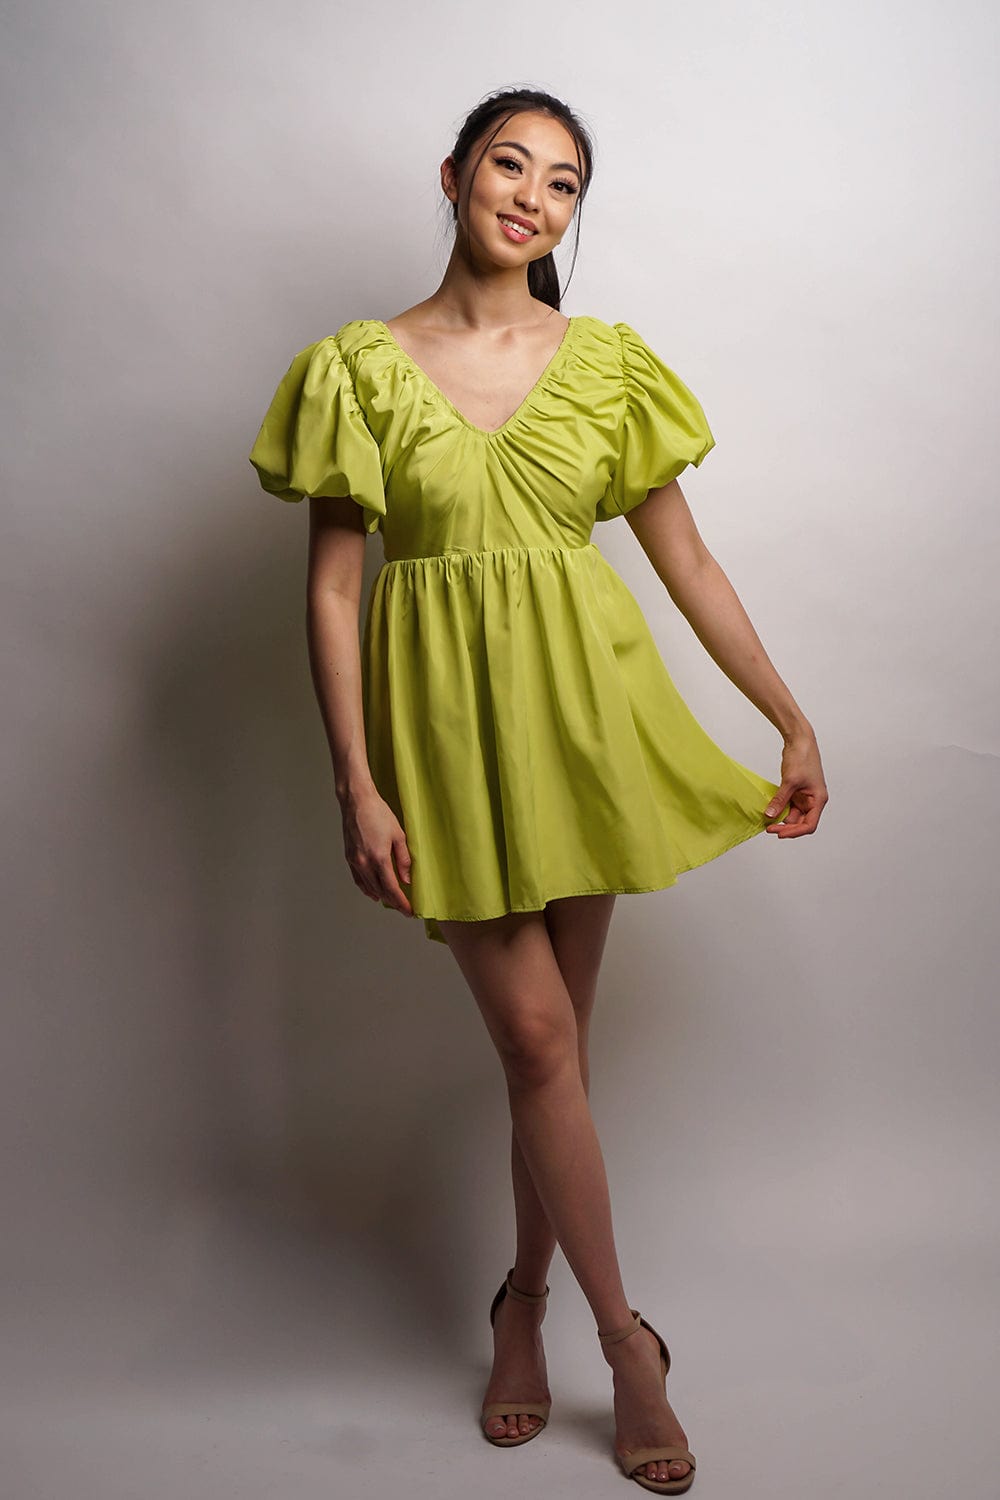 DCD DRESSES Lime Green Puff Sleeves Taffeta Dress